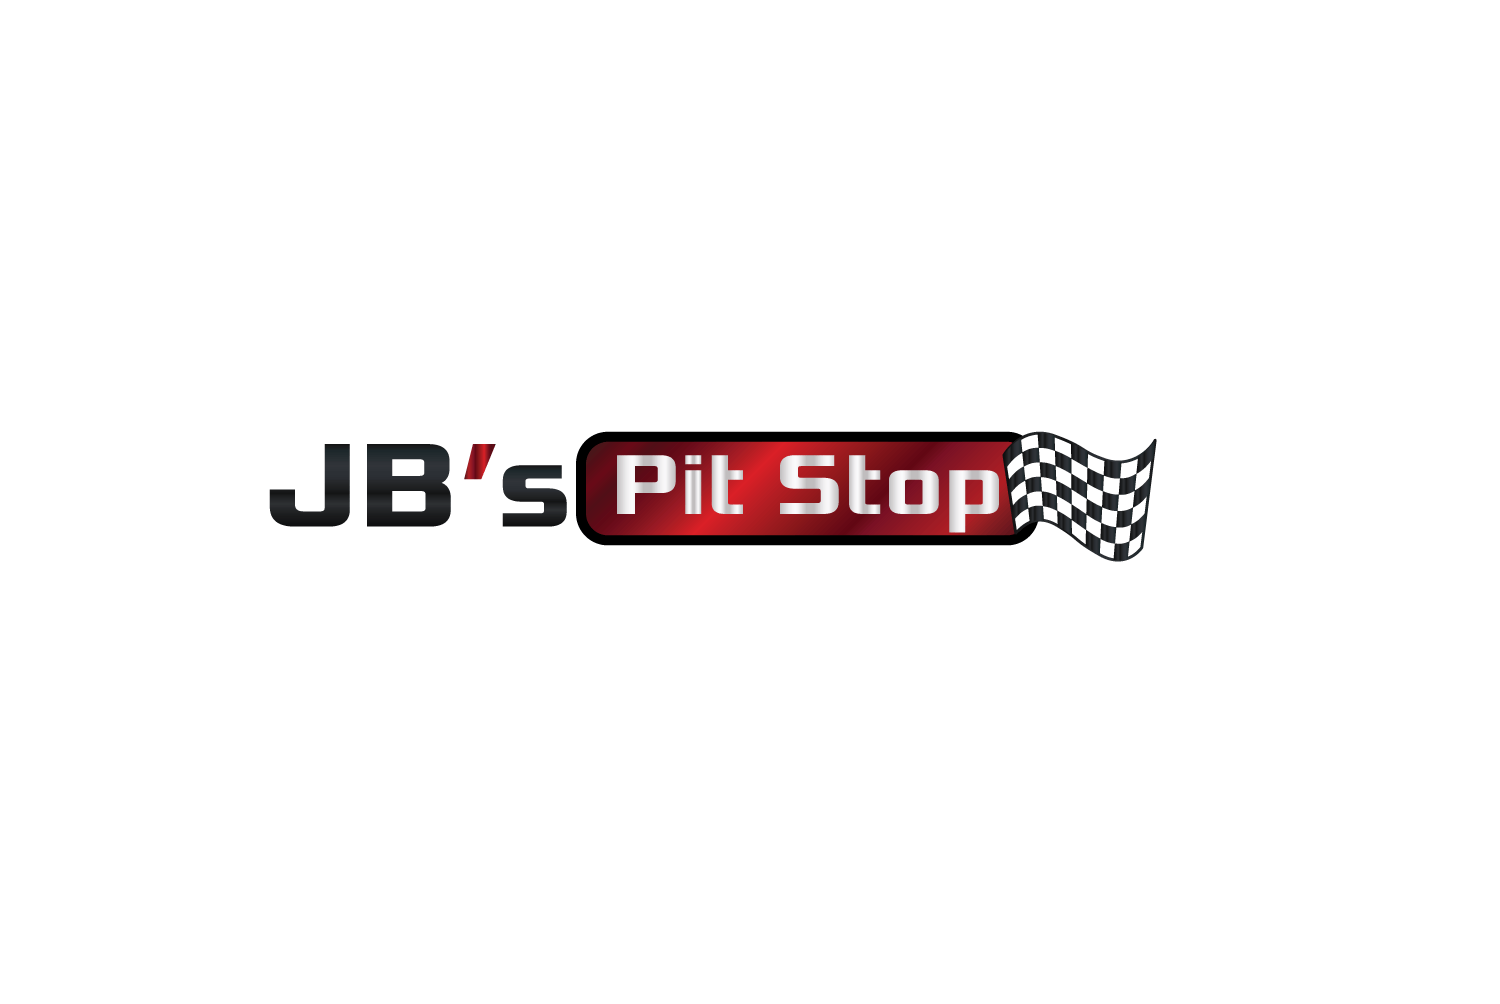 Janssen Logo - Bold, Modern, Automotive Logo Design for JB's Pit Stop